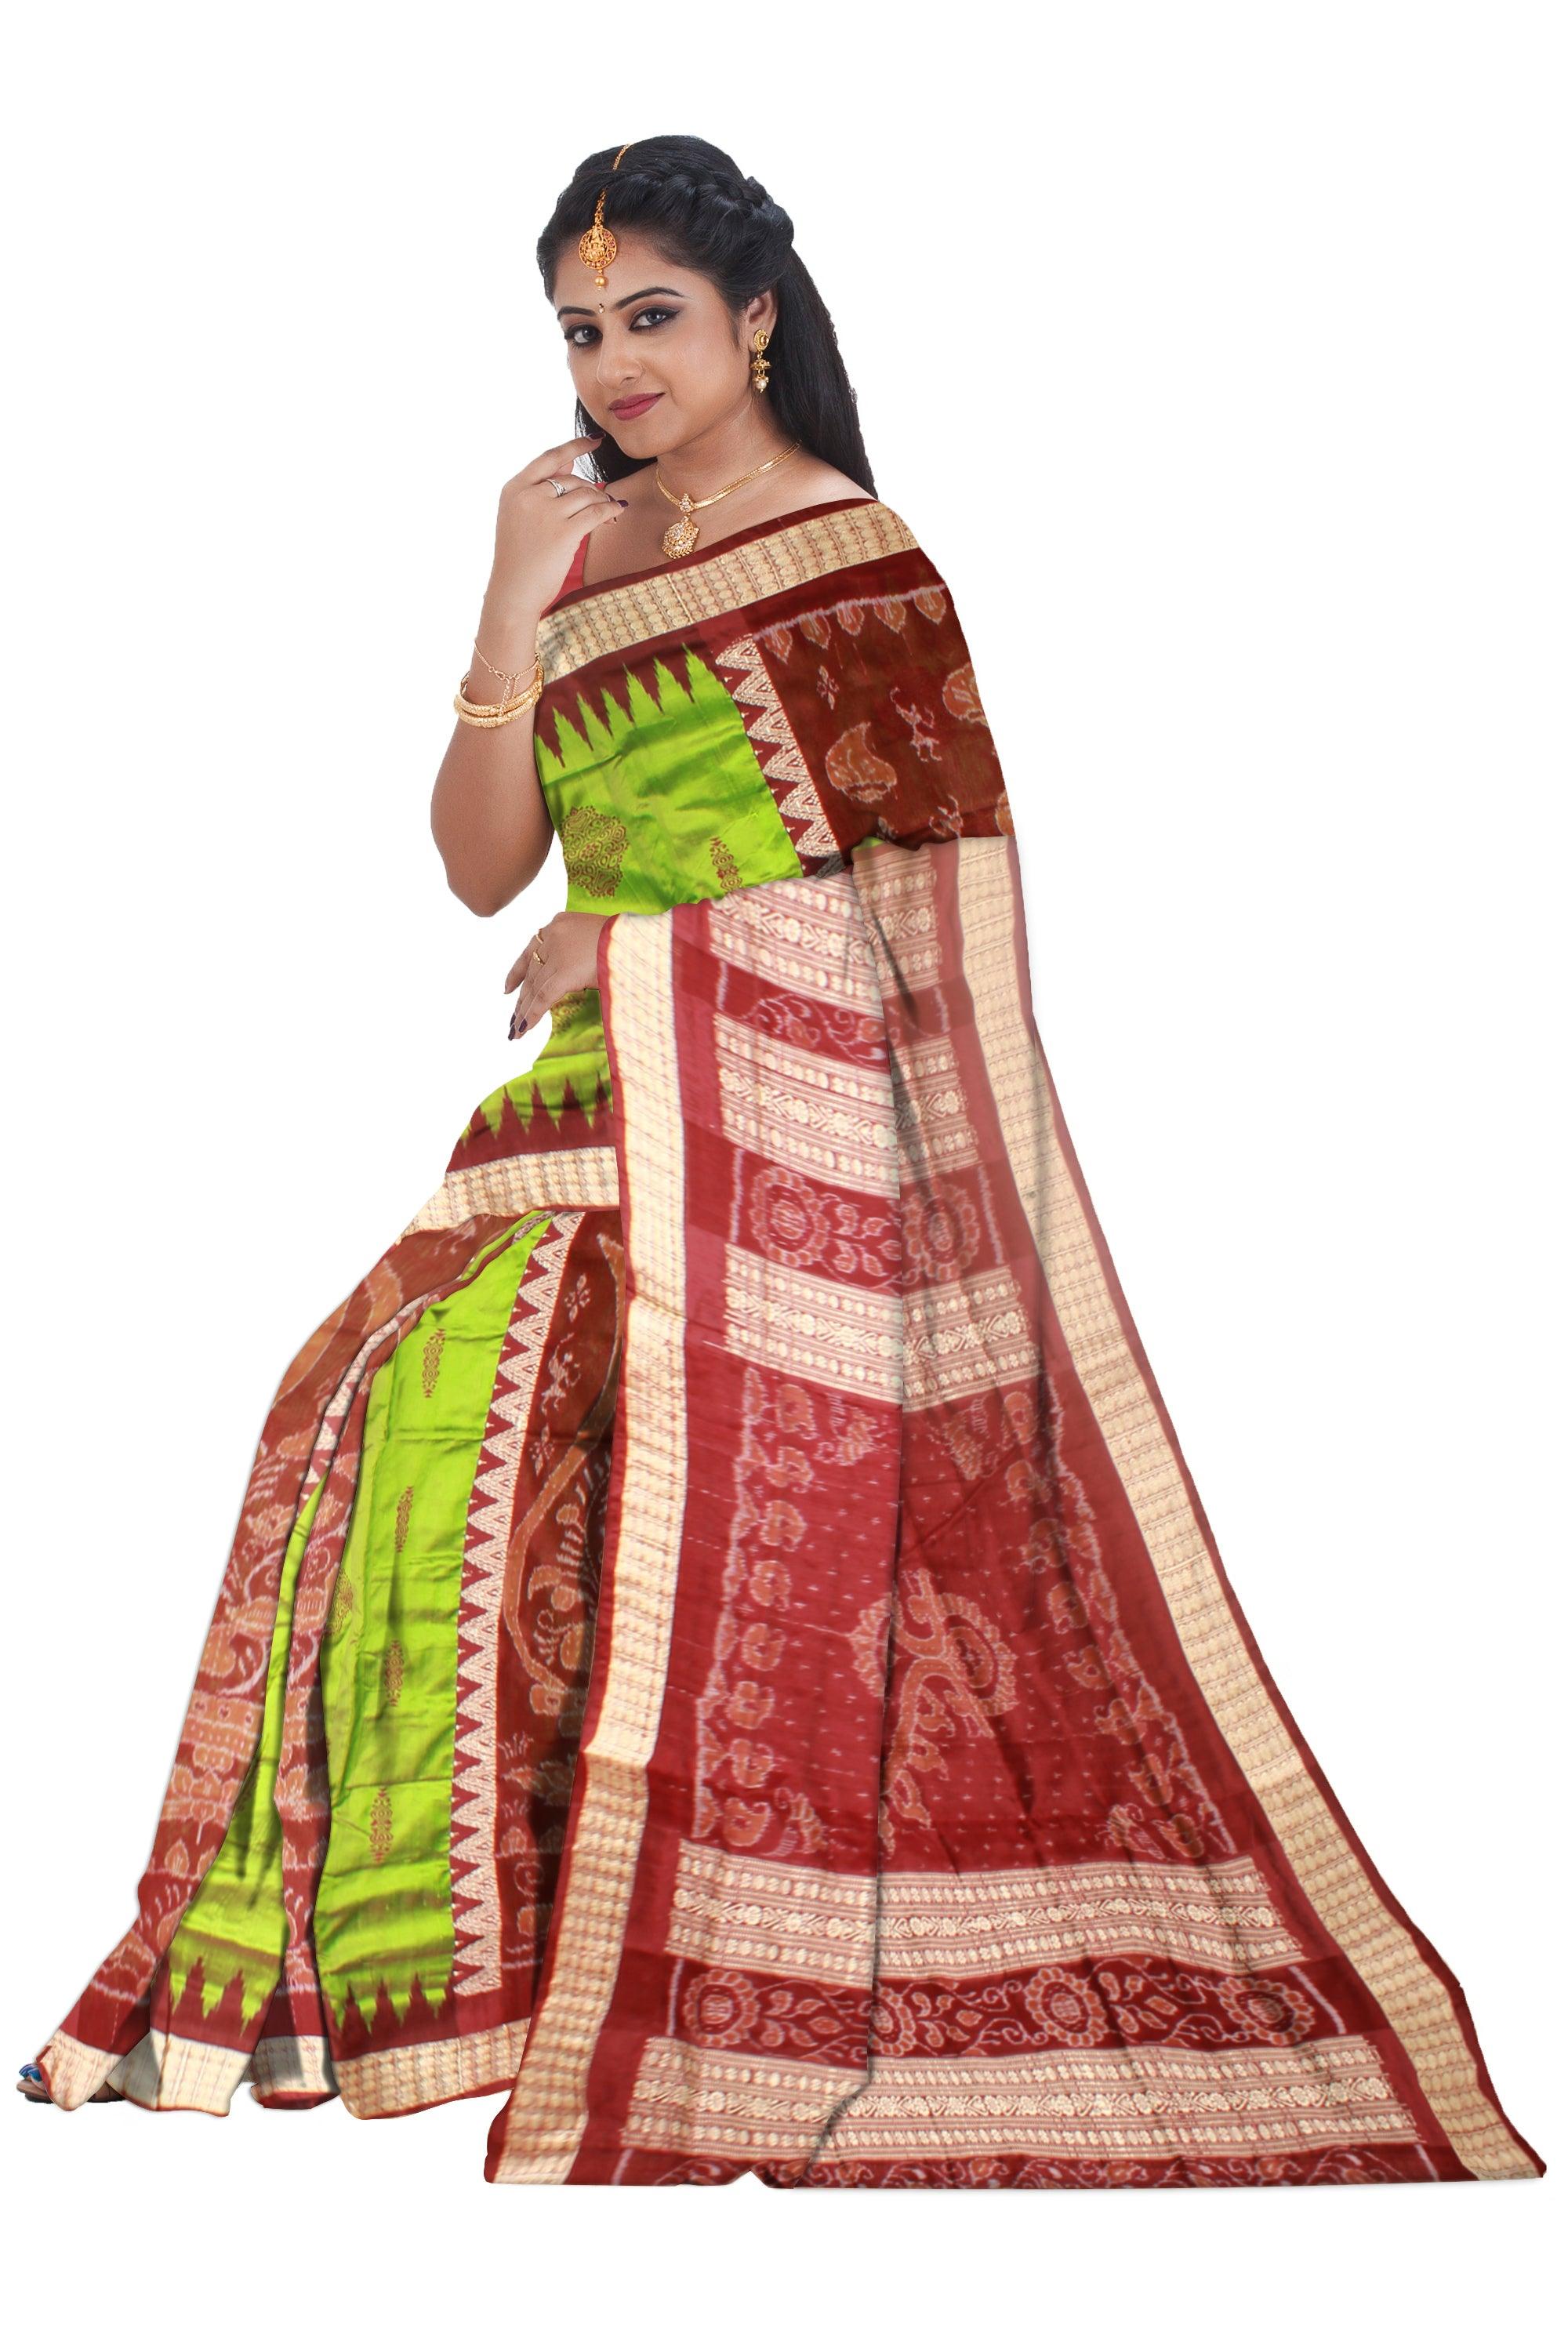 Sambalpuri Bomkei Pata Saree in Maroon and Green Color in botty  design with maroon Border with blouse piece. - Koshali Arts & Crafts Enterprise